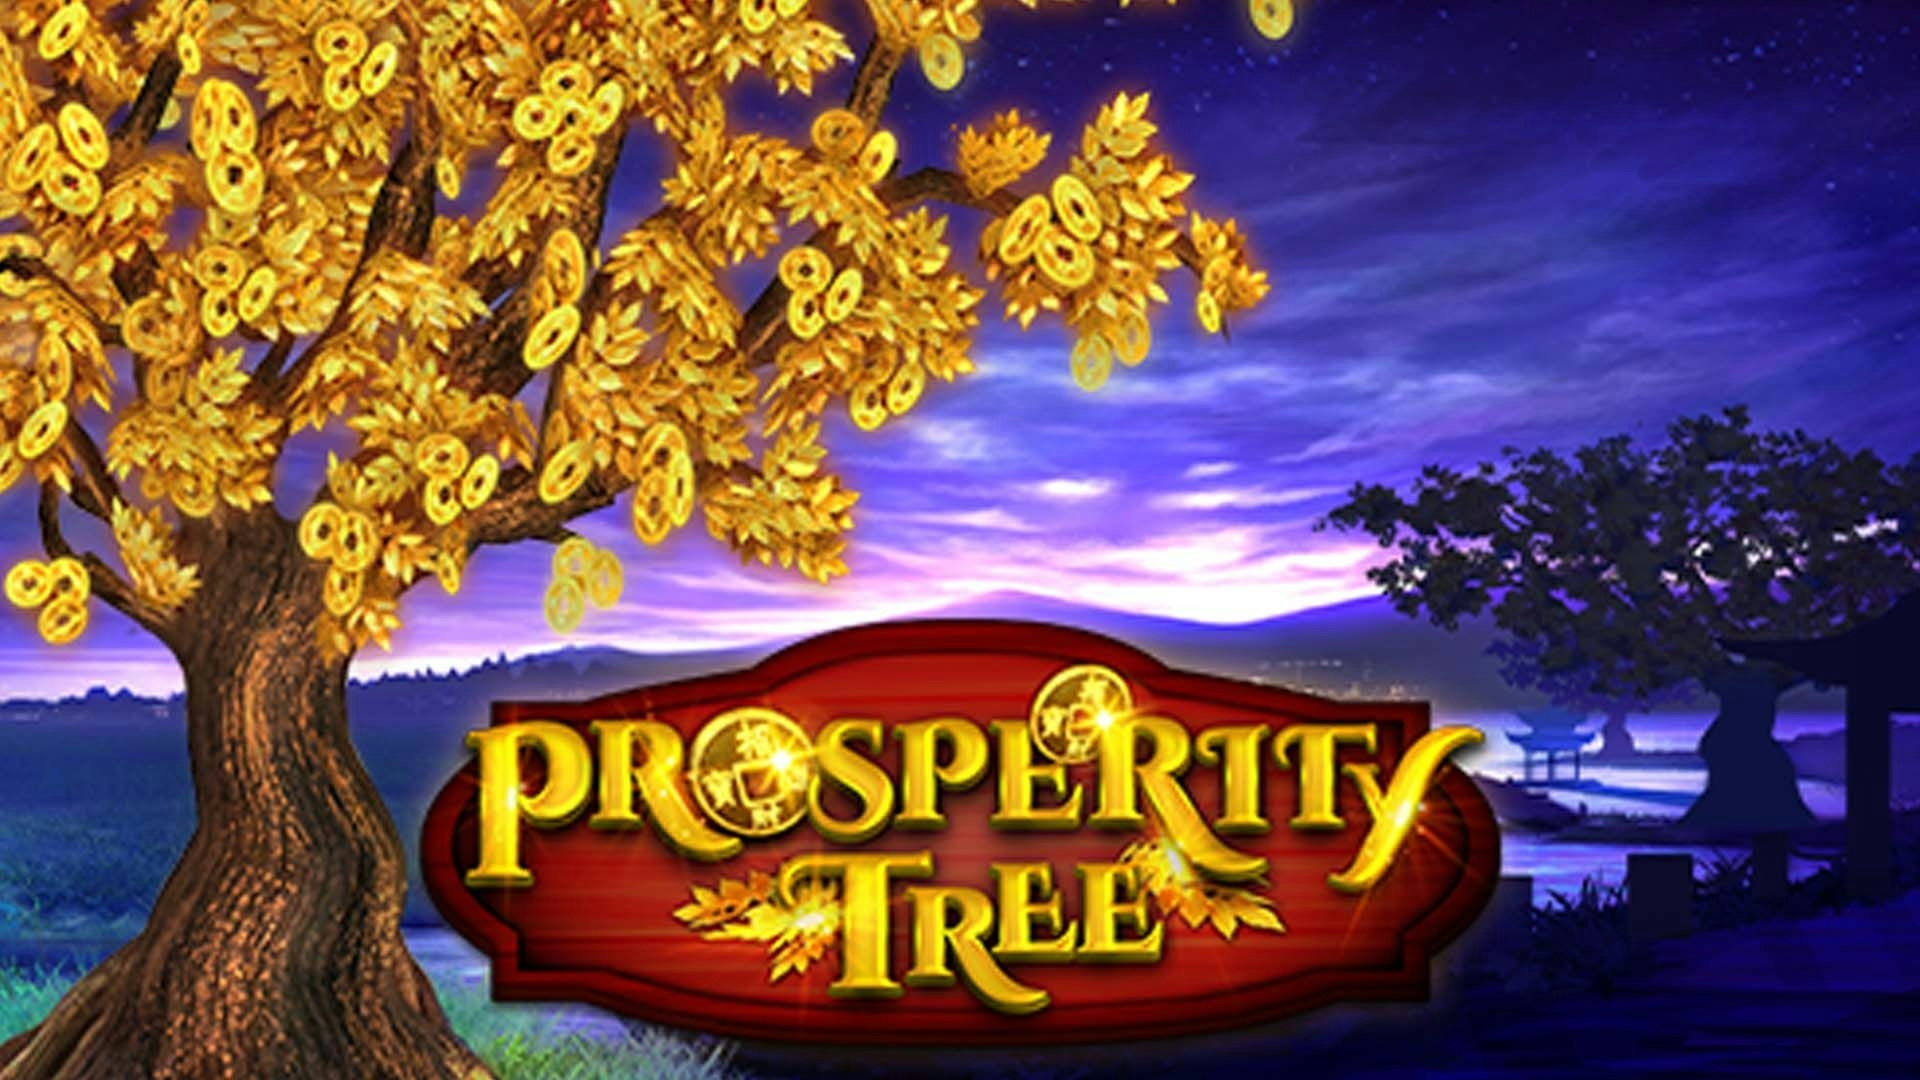 Prosperity Tree